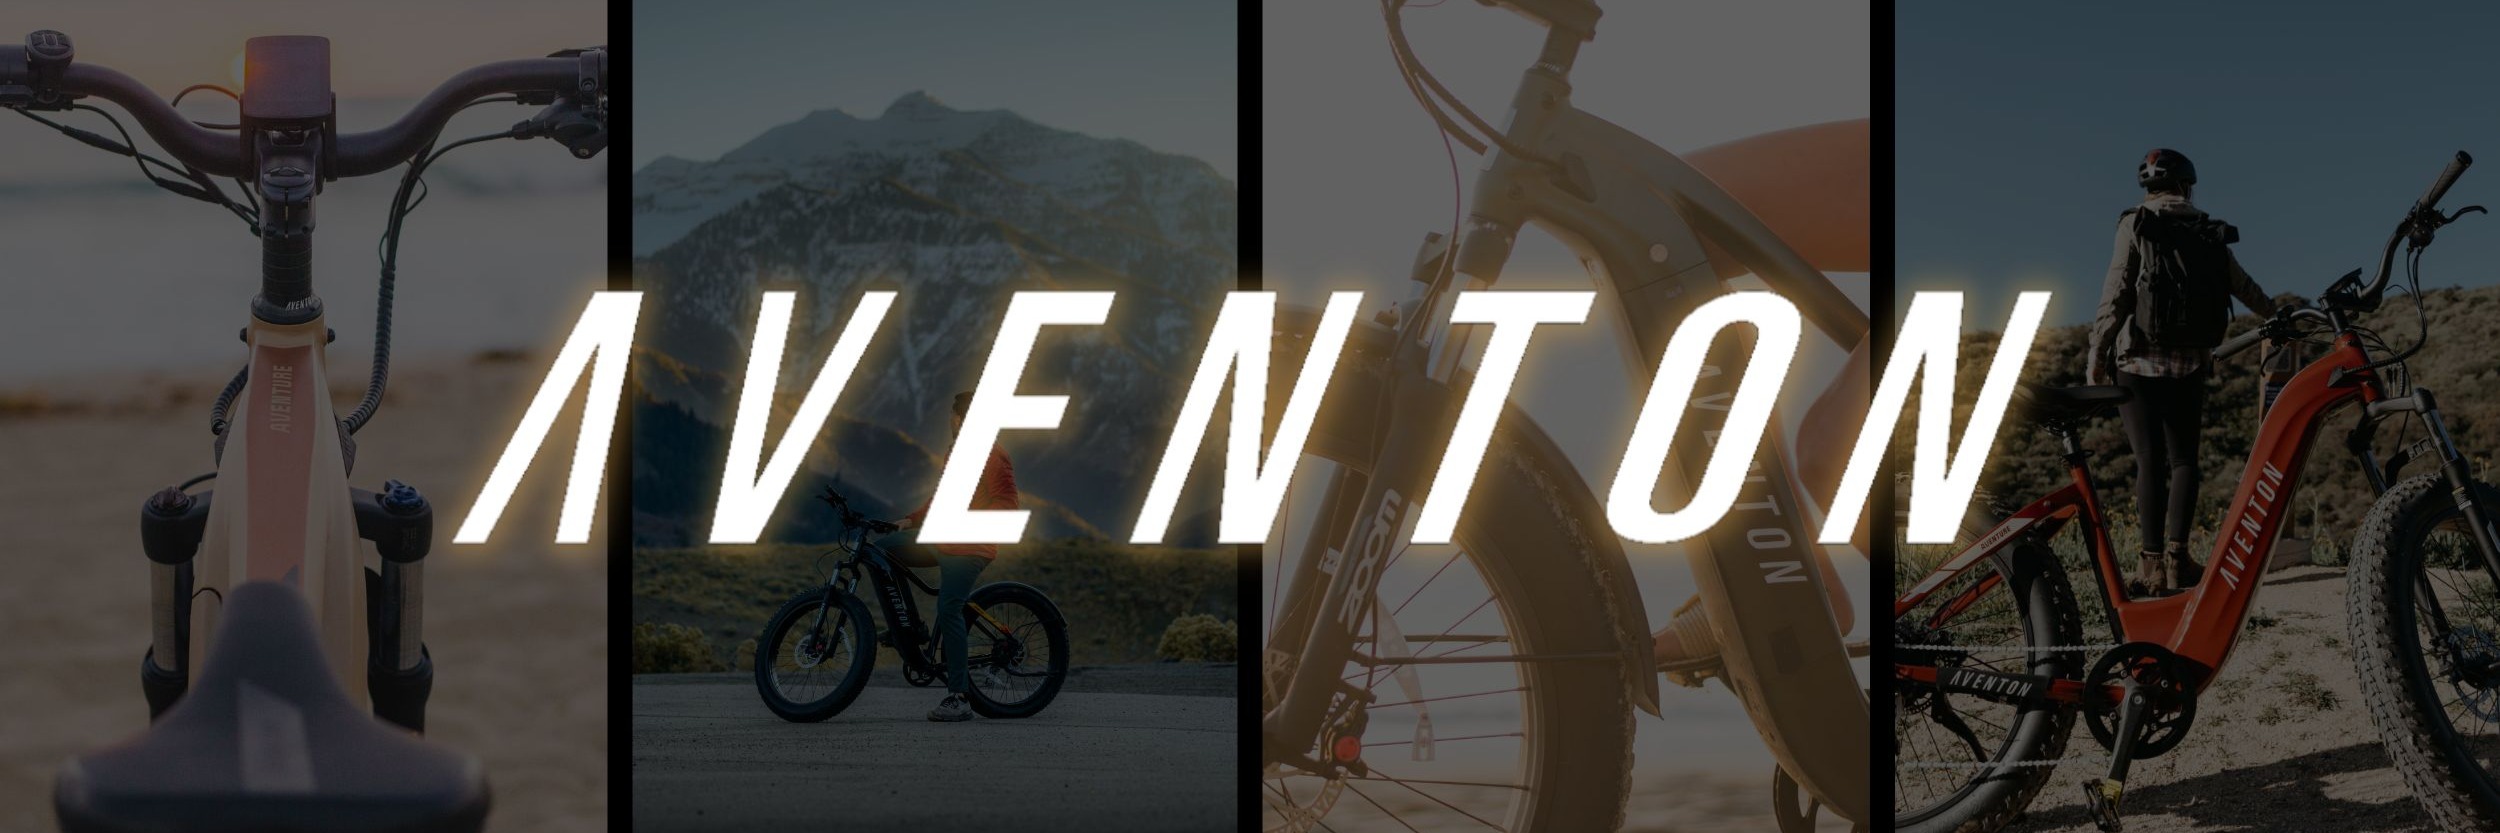 Aventon electric bikes Aventure 2.0 eBike hero image